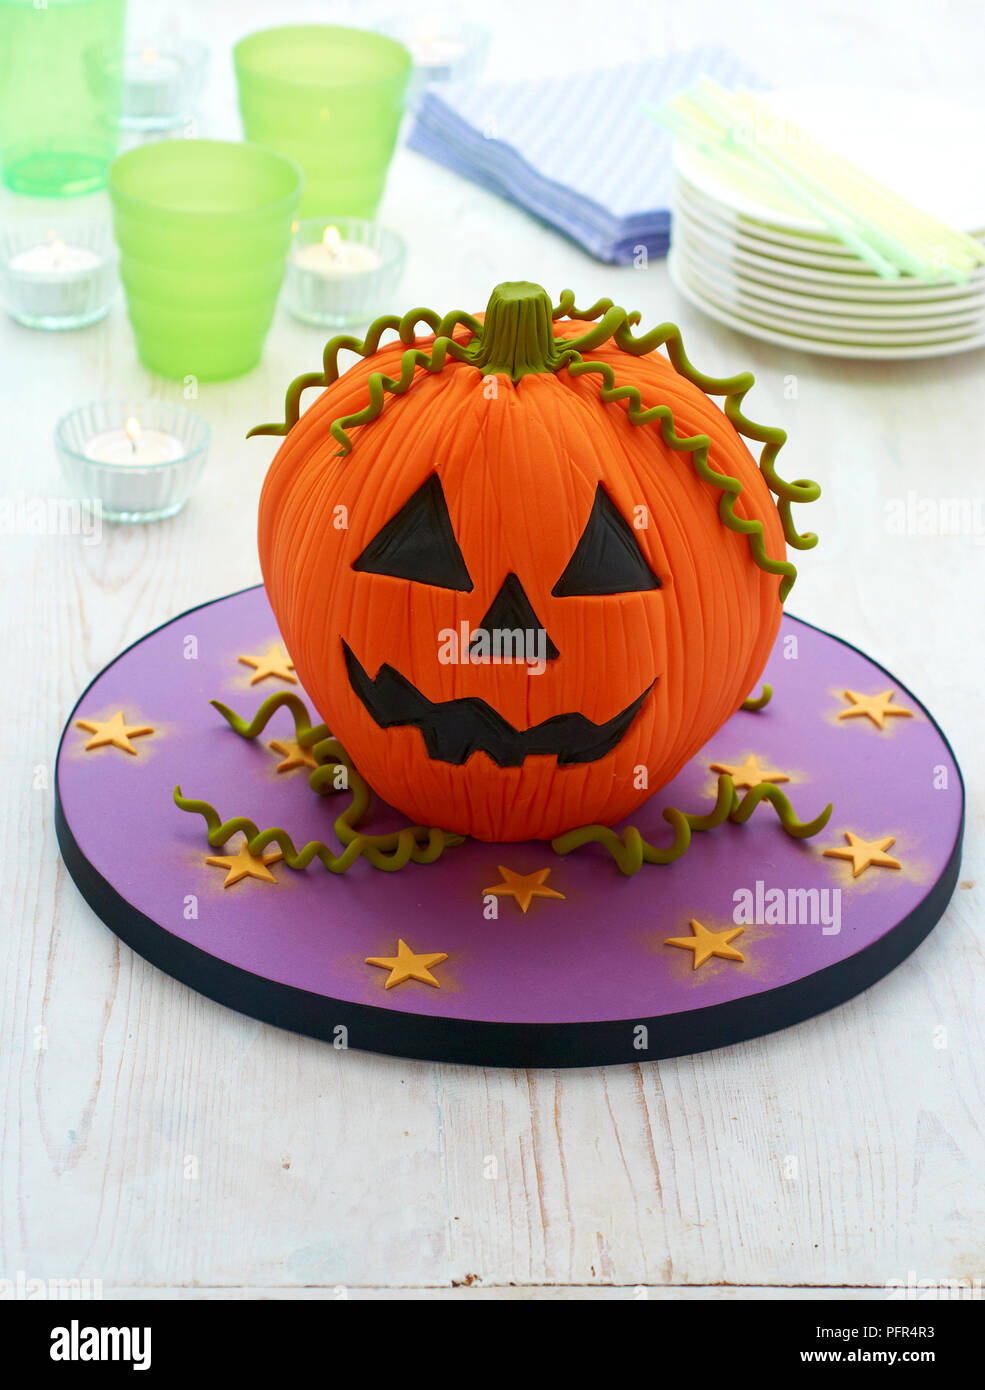 Halloween pumpkin cake Stock Photo